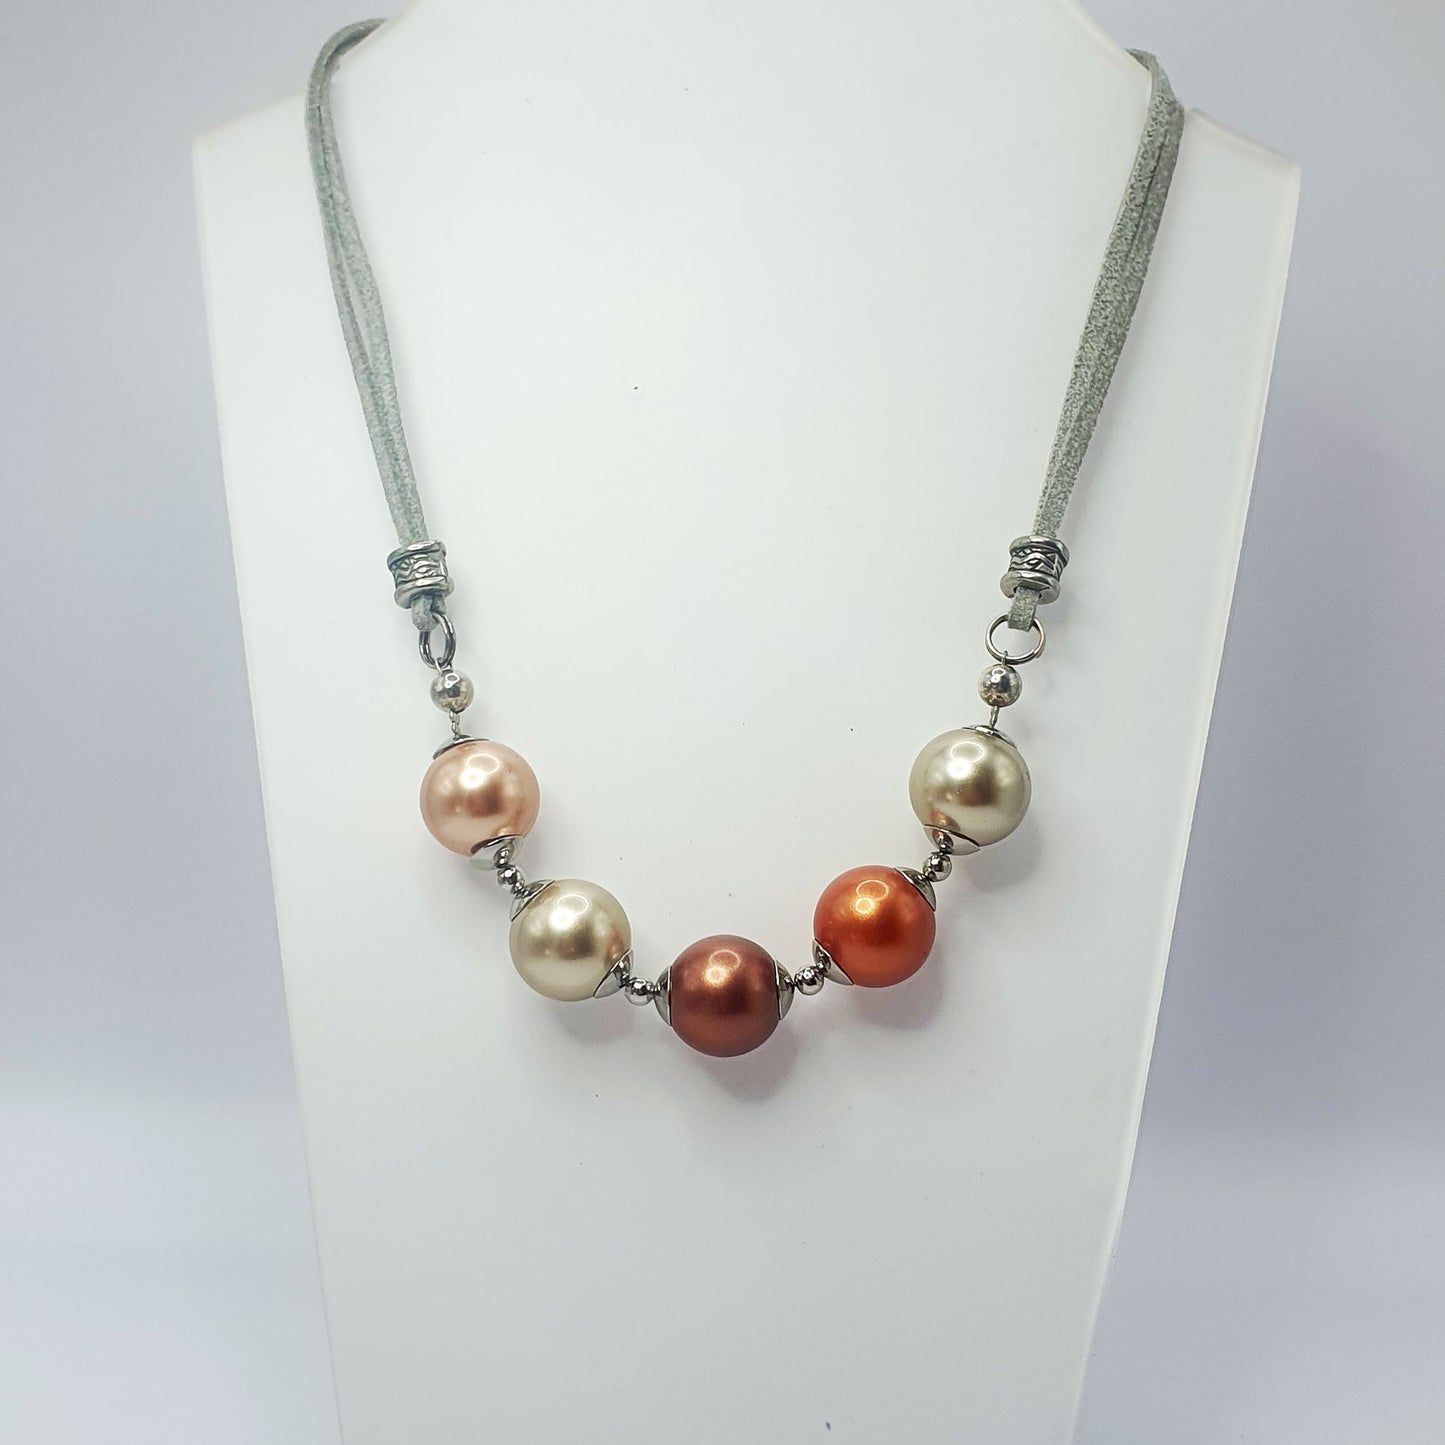 Glass pearl crescent necklace in bronze tones